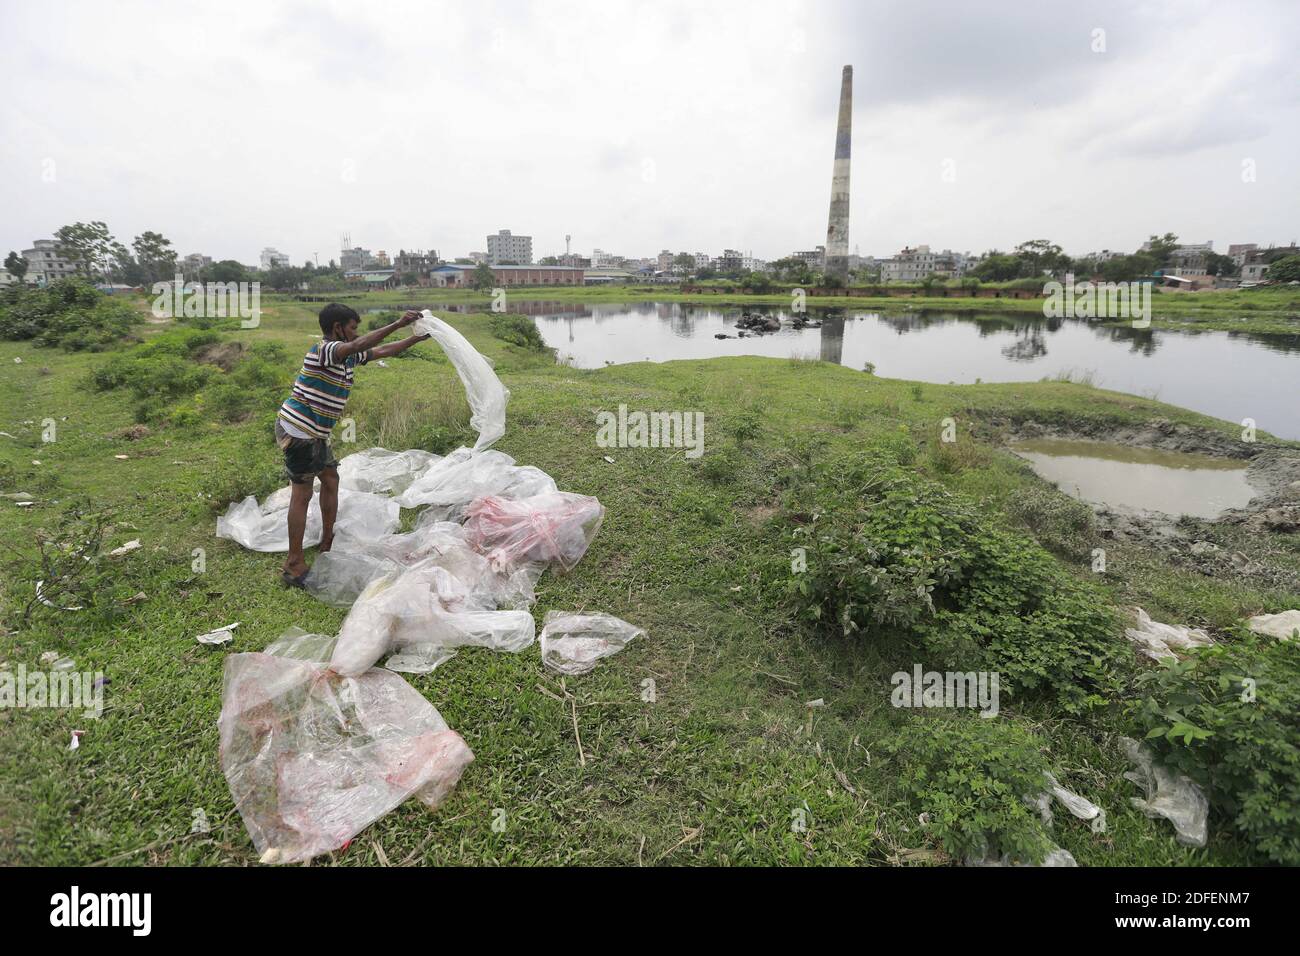 A Bangladeshi man dries plastic waste after wash them in the water of the Turag River in Tongi, near Dhaka, Bangladesh, July 9, 2020. Photo by Kanti Das Suvra/ABACAPRESS.COM Stock Photo